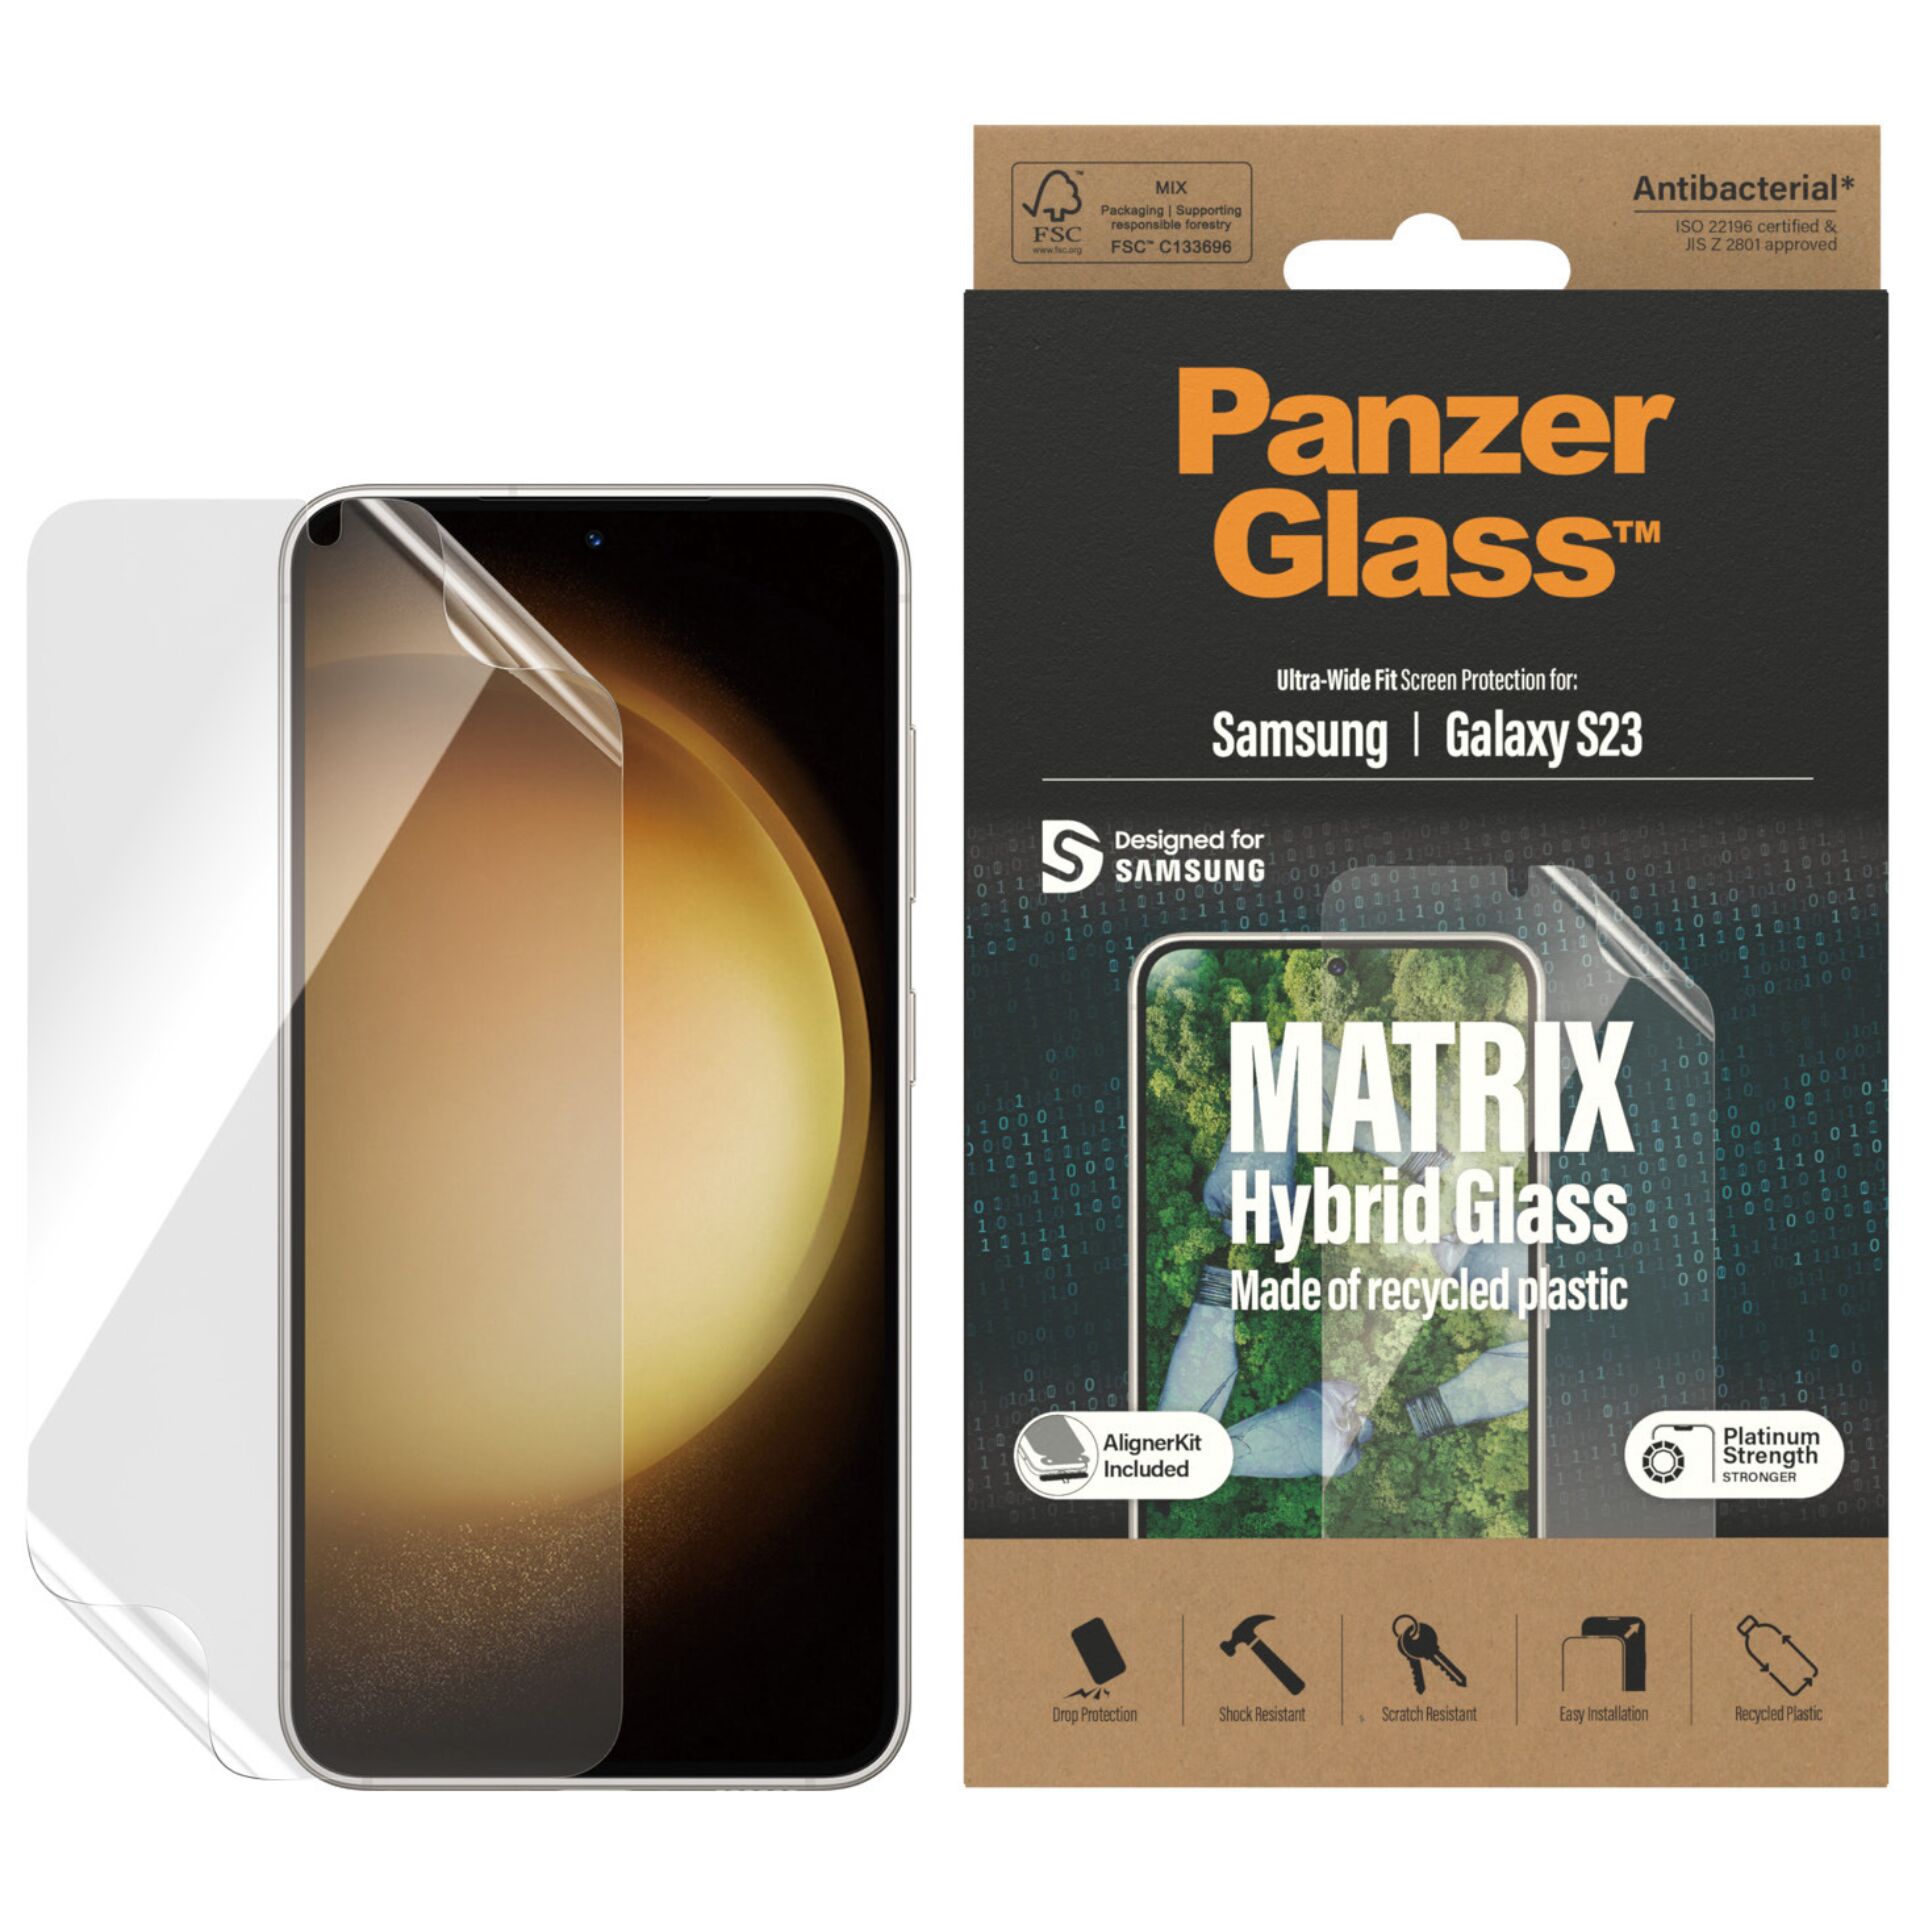 PanzerGlass Matrix Hybrid Glass per Galaxy S23